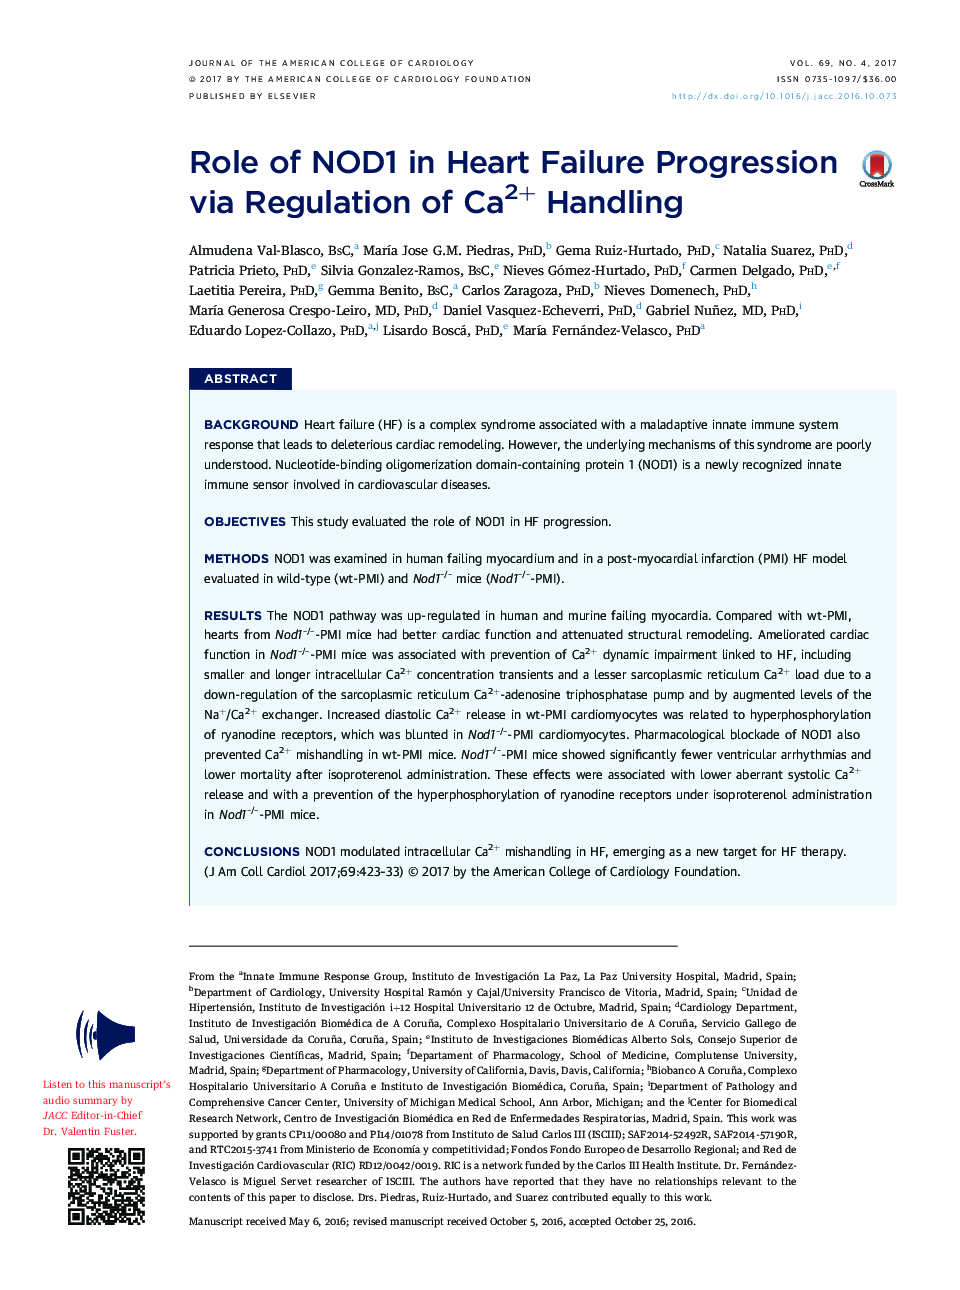 Role of NOD1 in Heart Failure Progression via Regulation of Ca2+ Handling